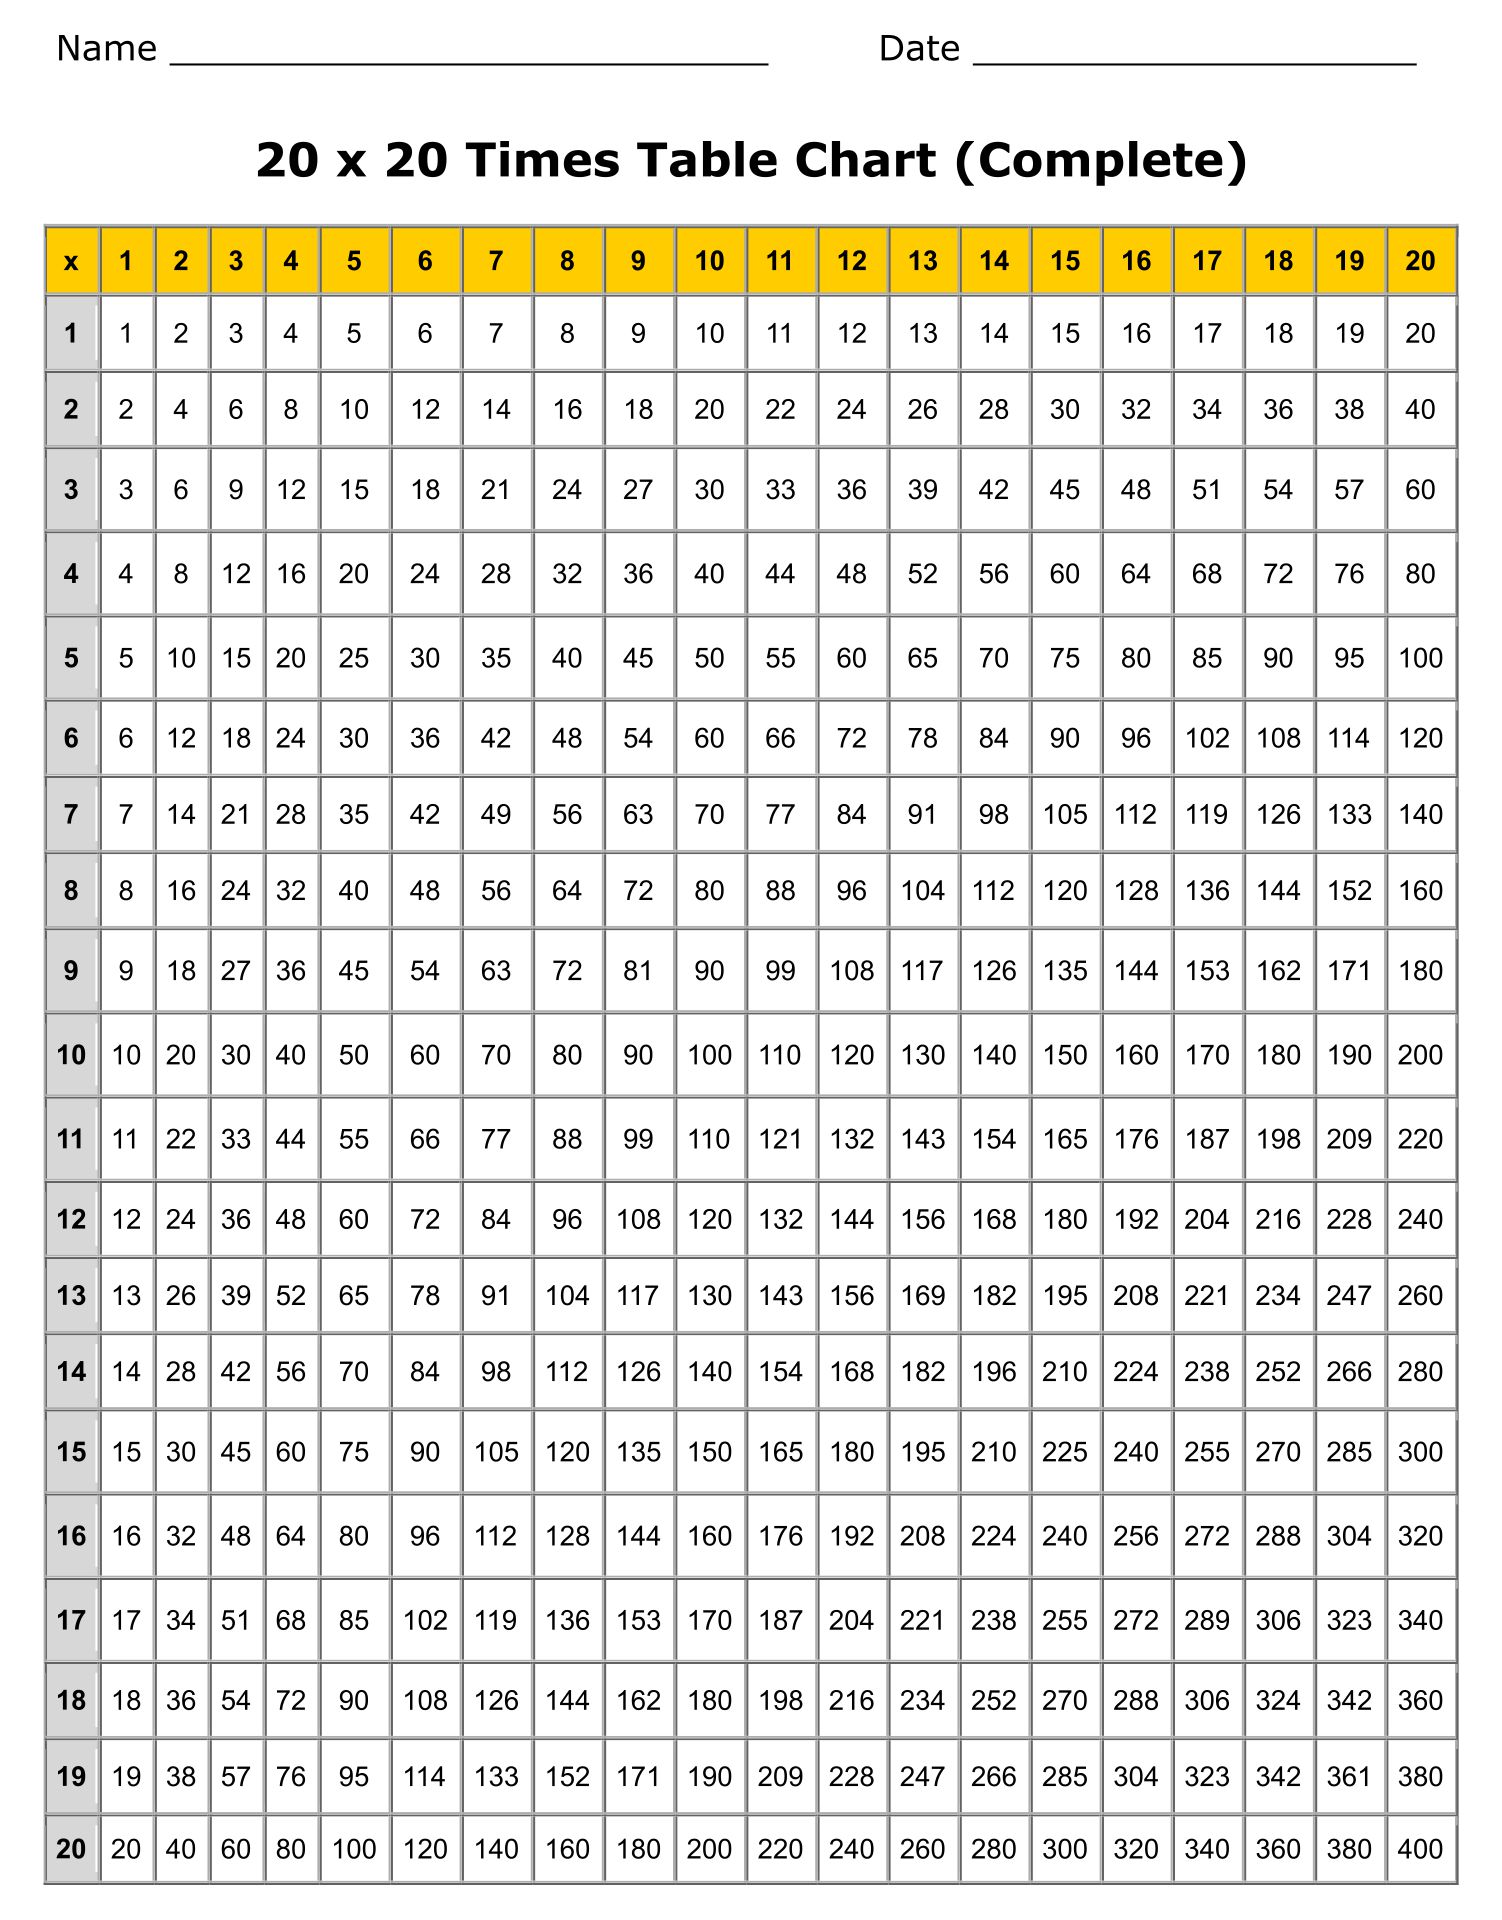 free multiplication charts 1 20